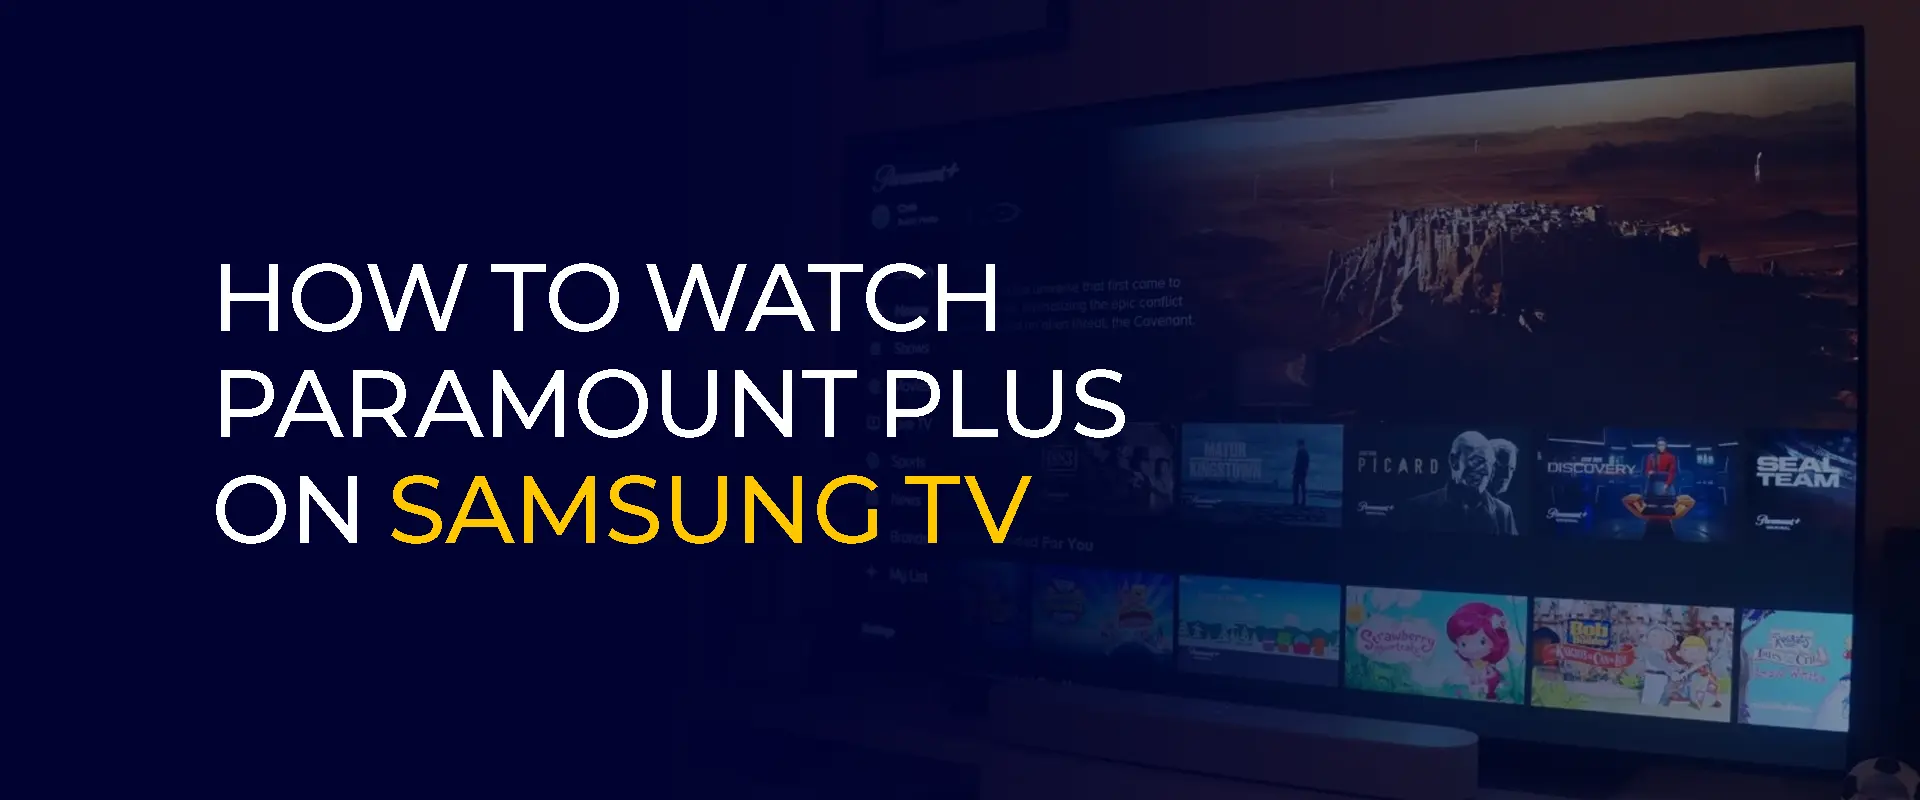 Samsung TV'de Paramount Plus Nasıl İzlenir